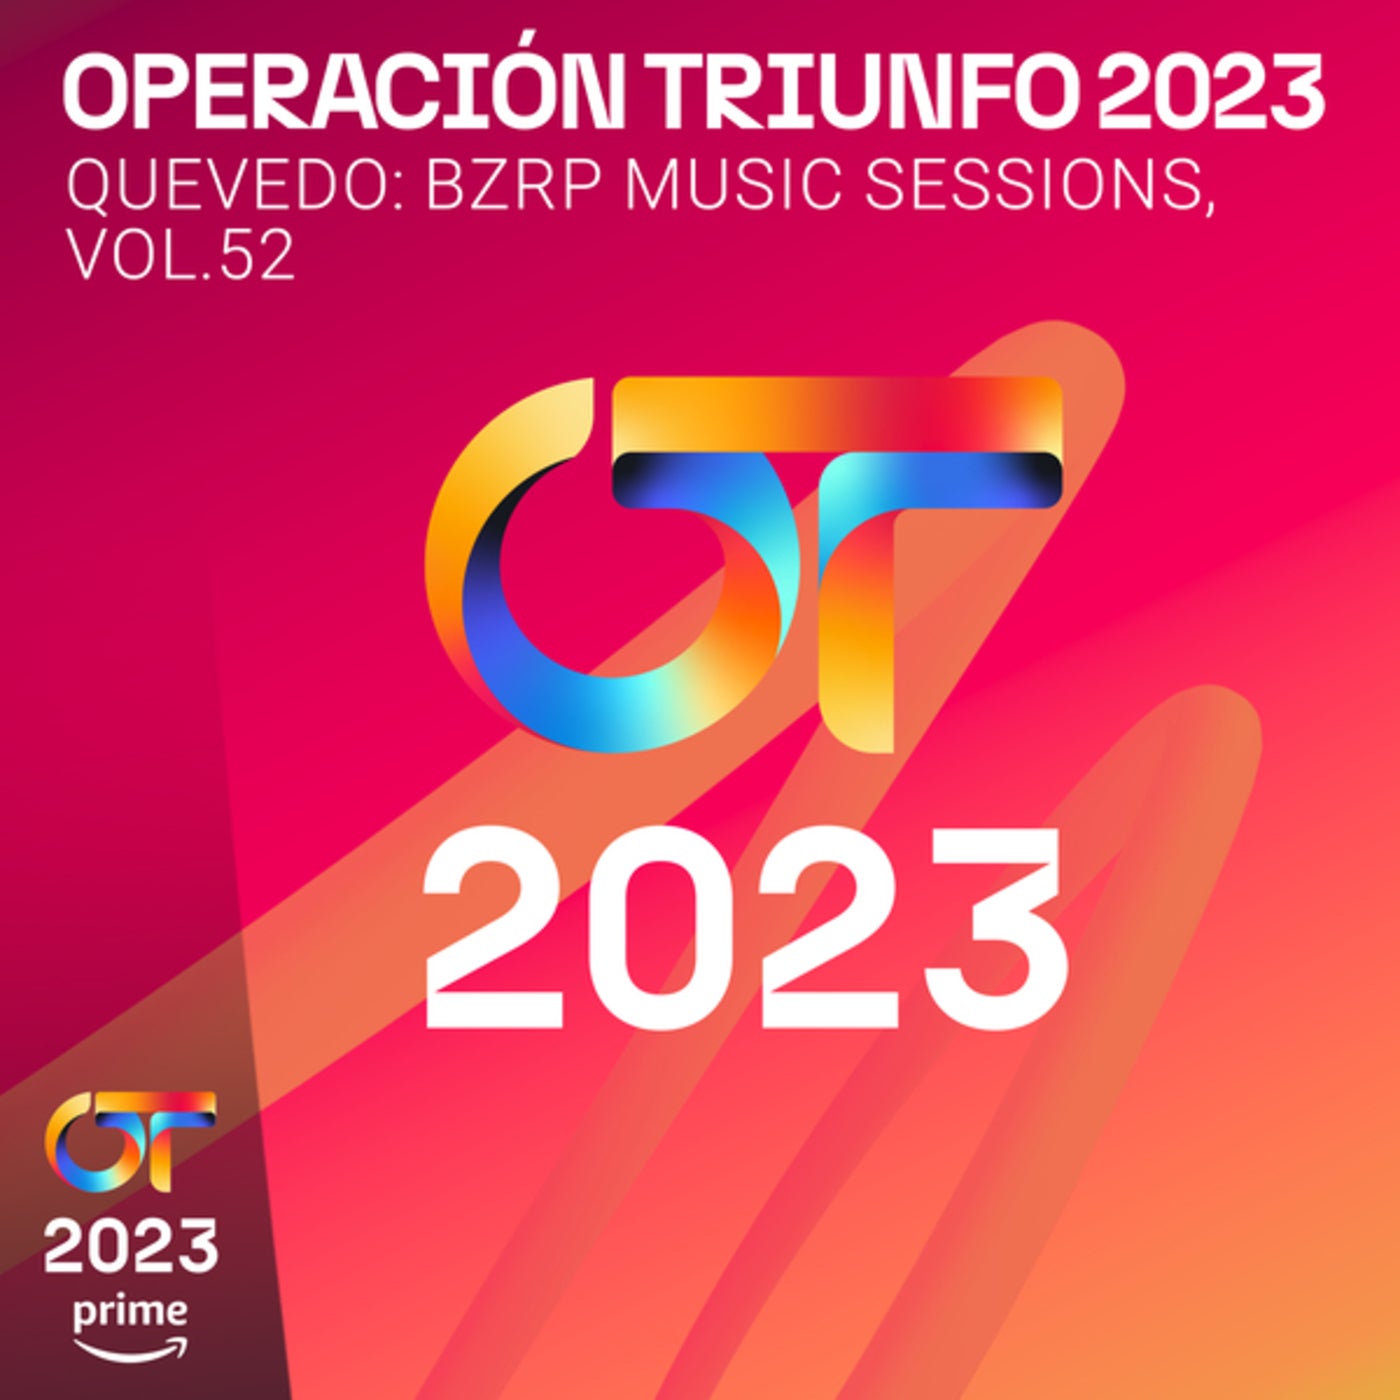 Navidad, Navidad by Operación Triunfo 2023 and Franz Schubert Filharmonia  on Beatsource